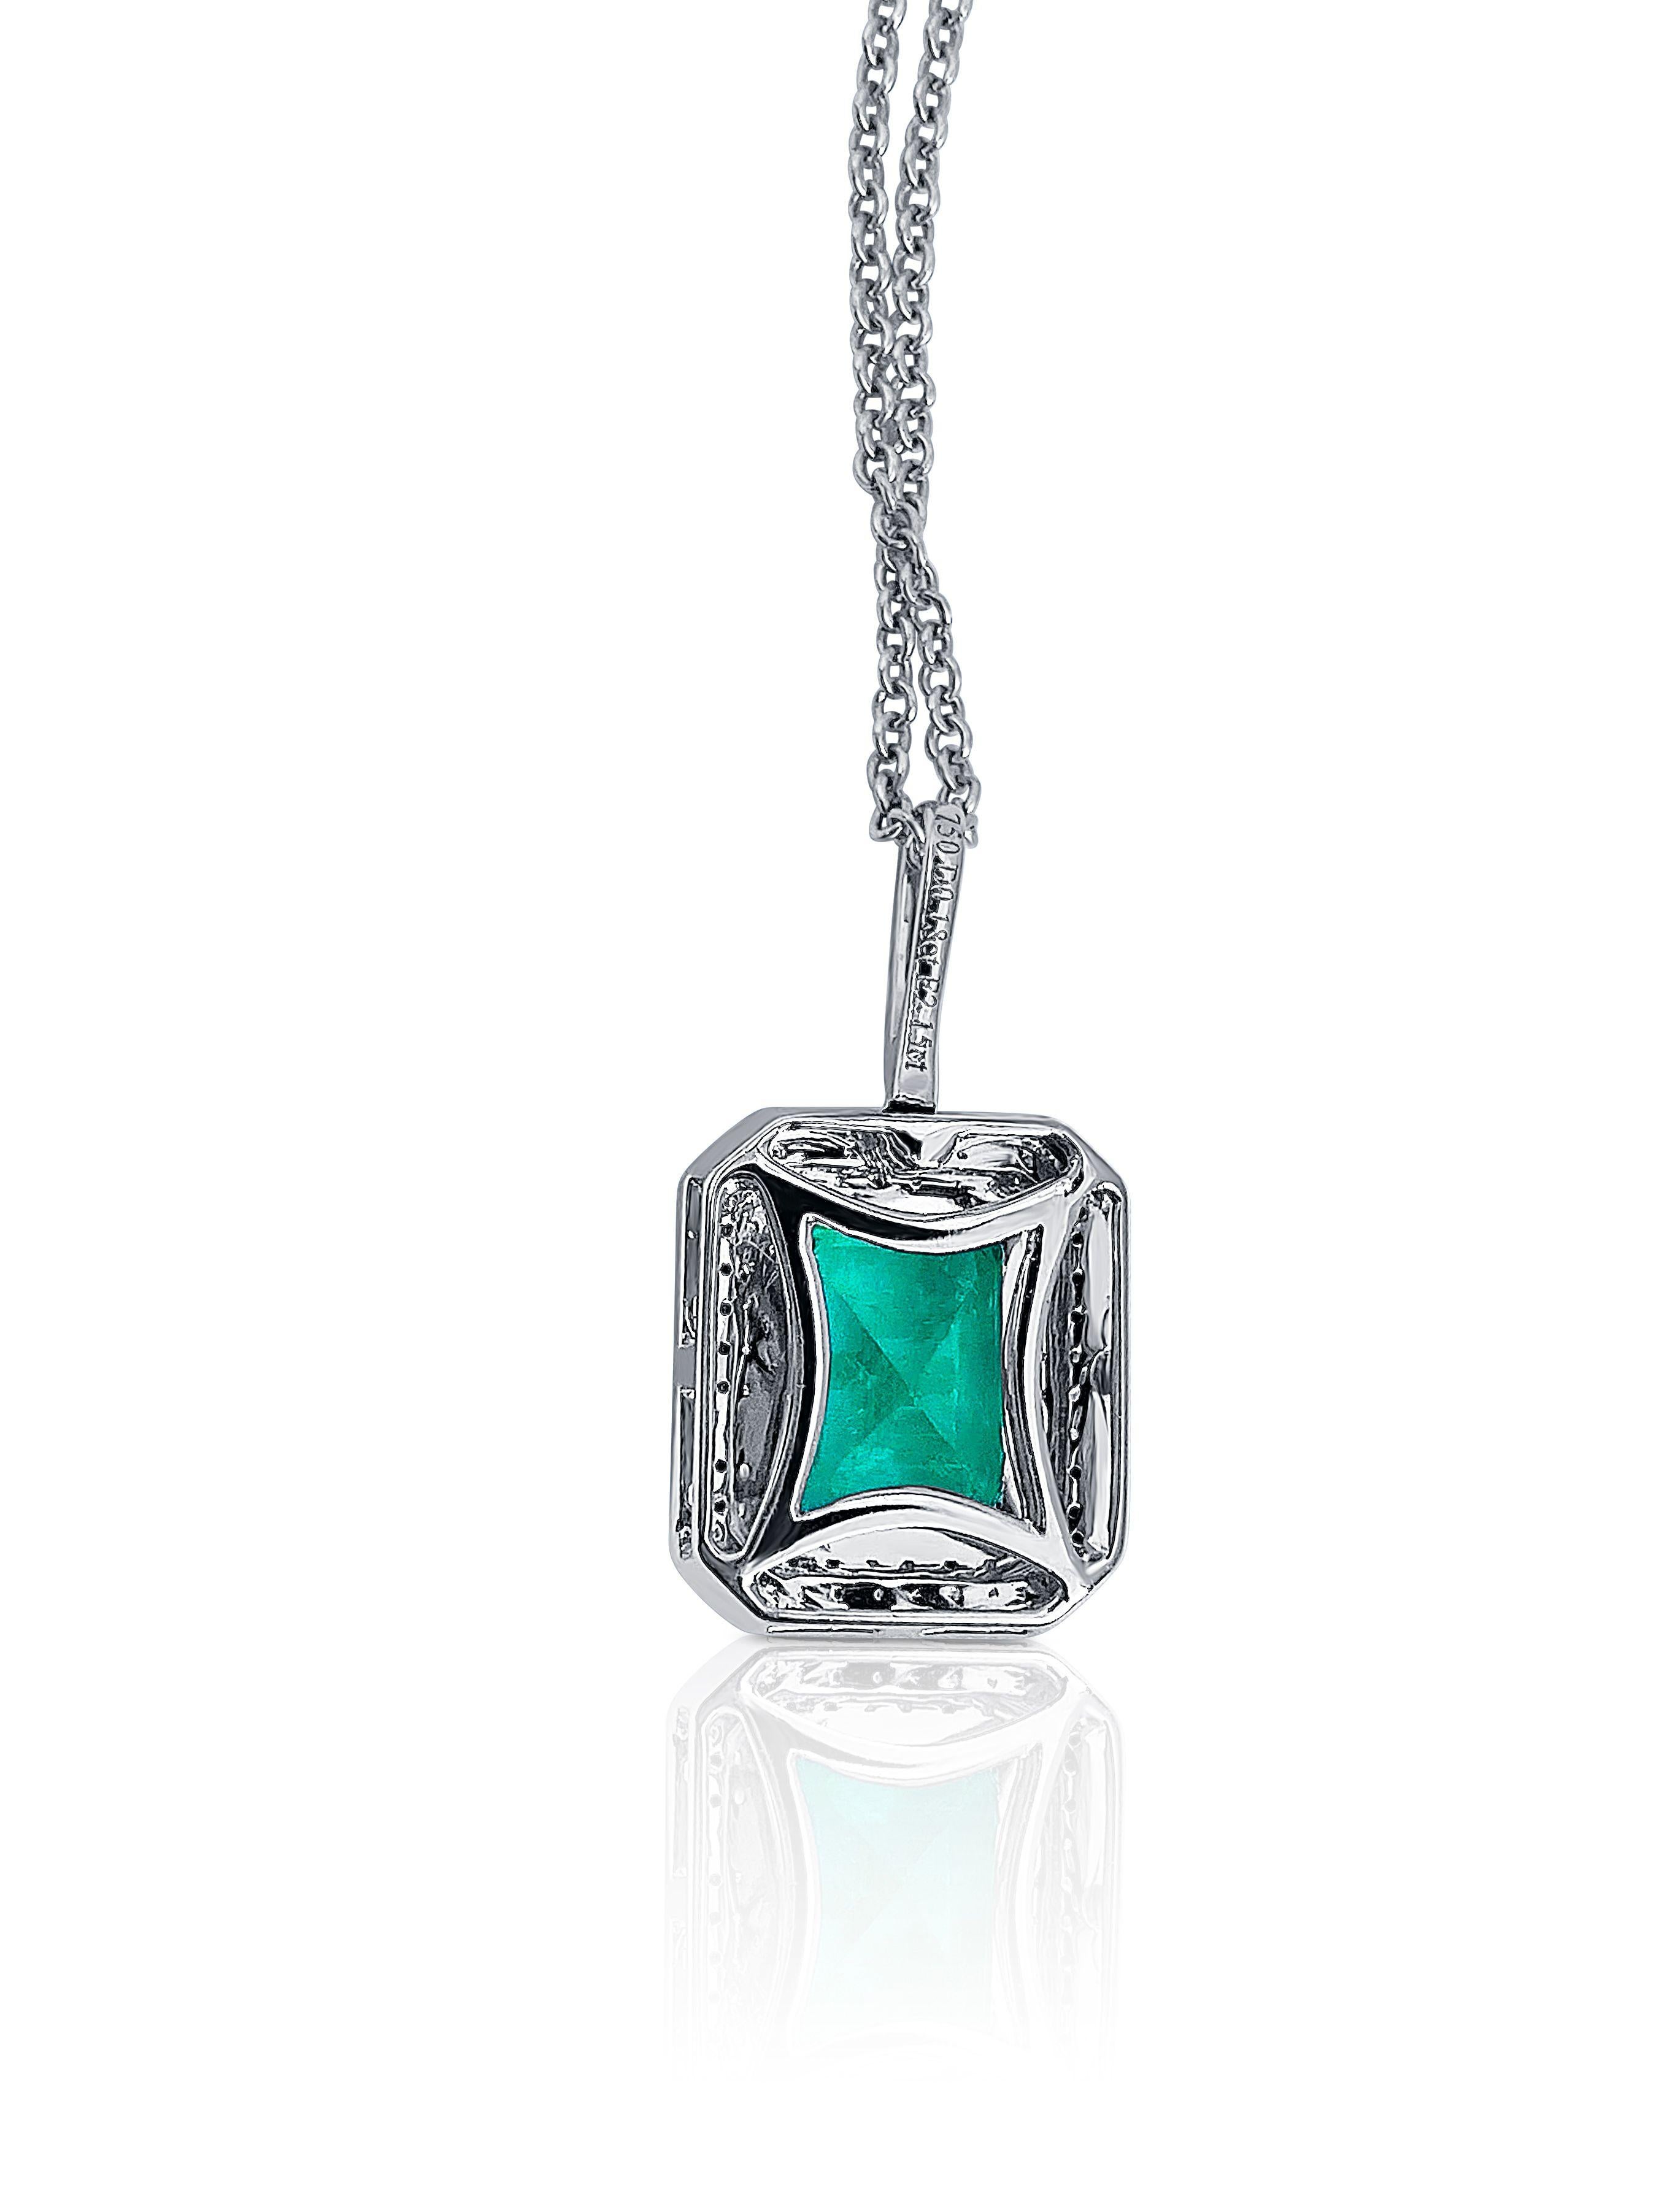 Emerald Cut 2.15 Carat Colombian Emerald and Diamond 18 Karat Gold Pendant